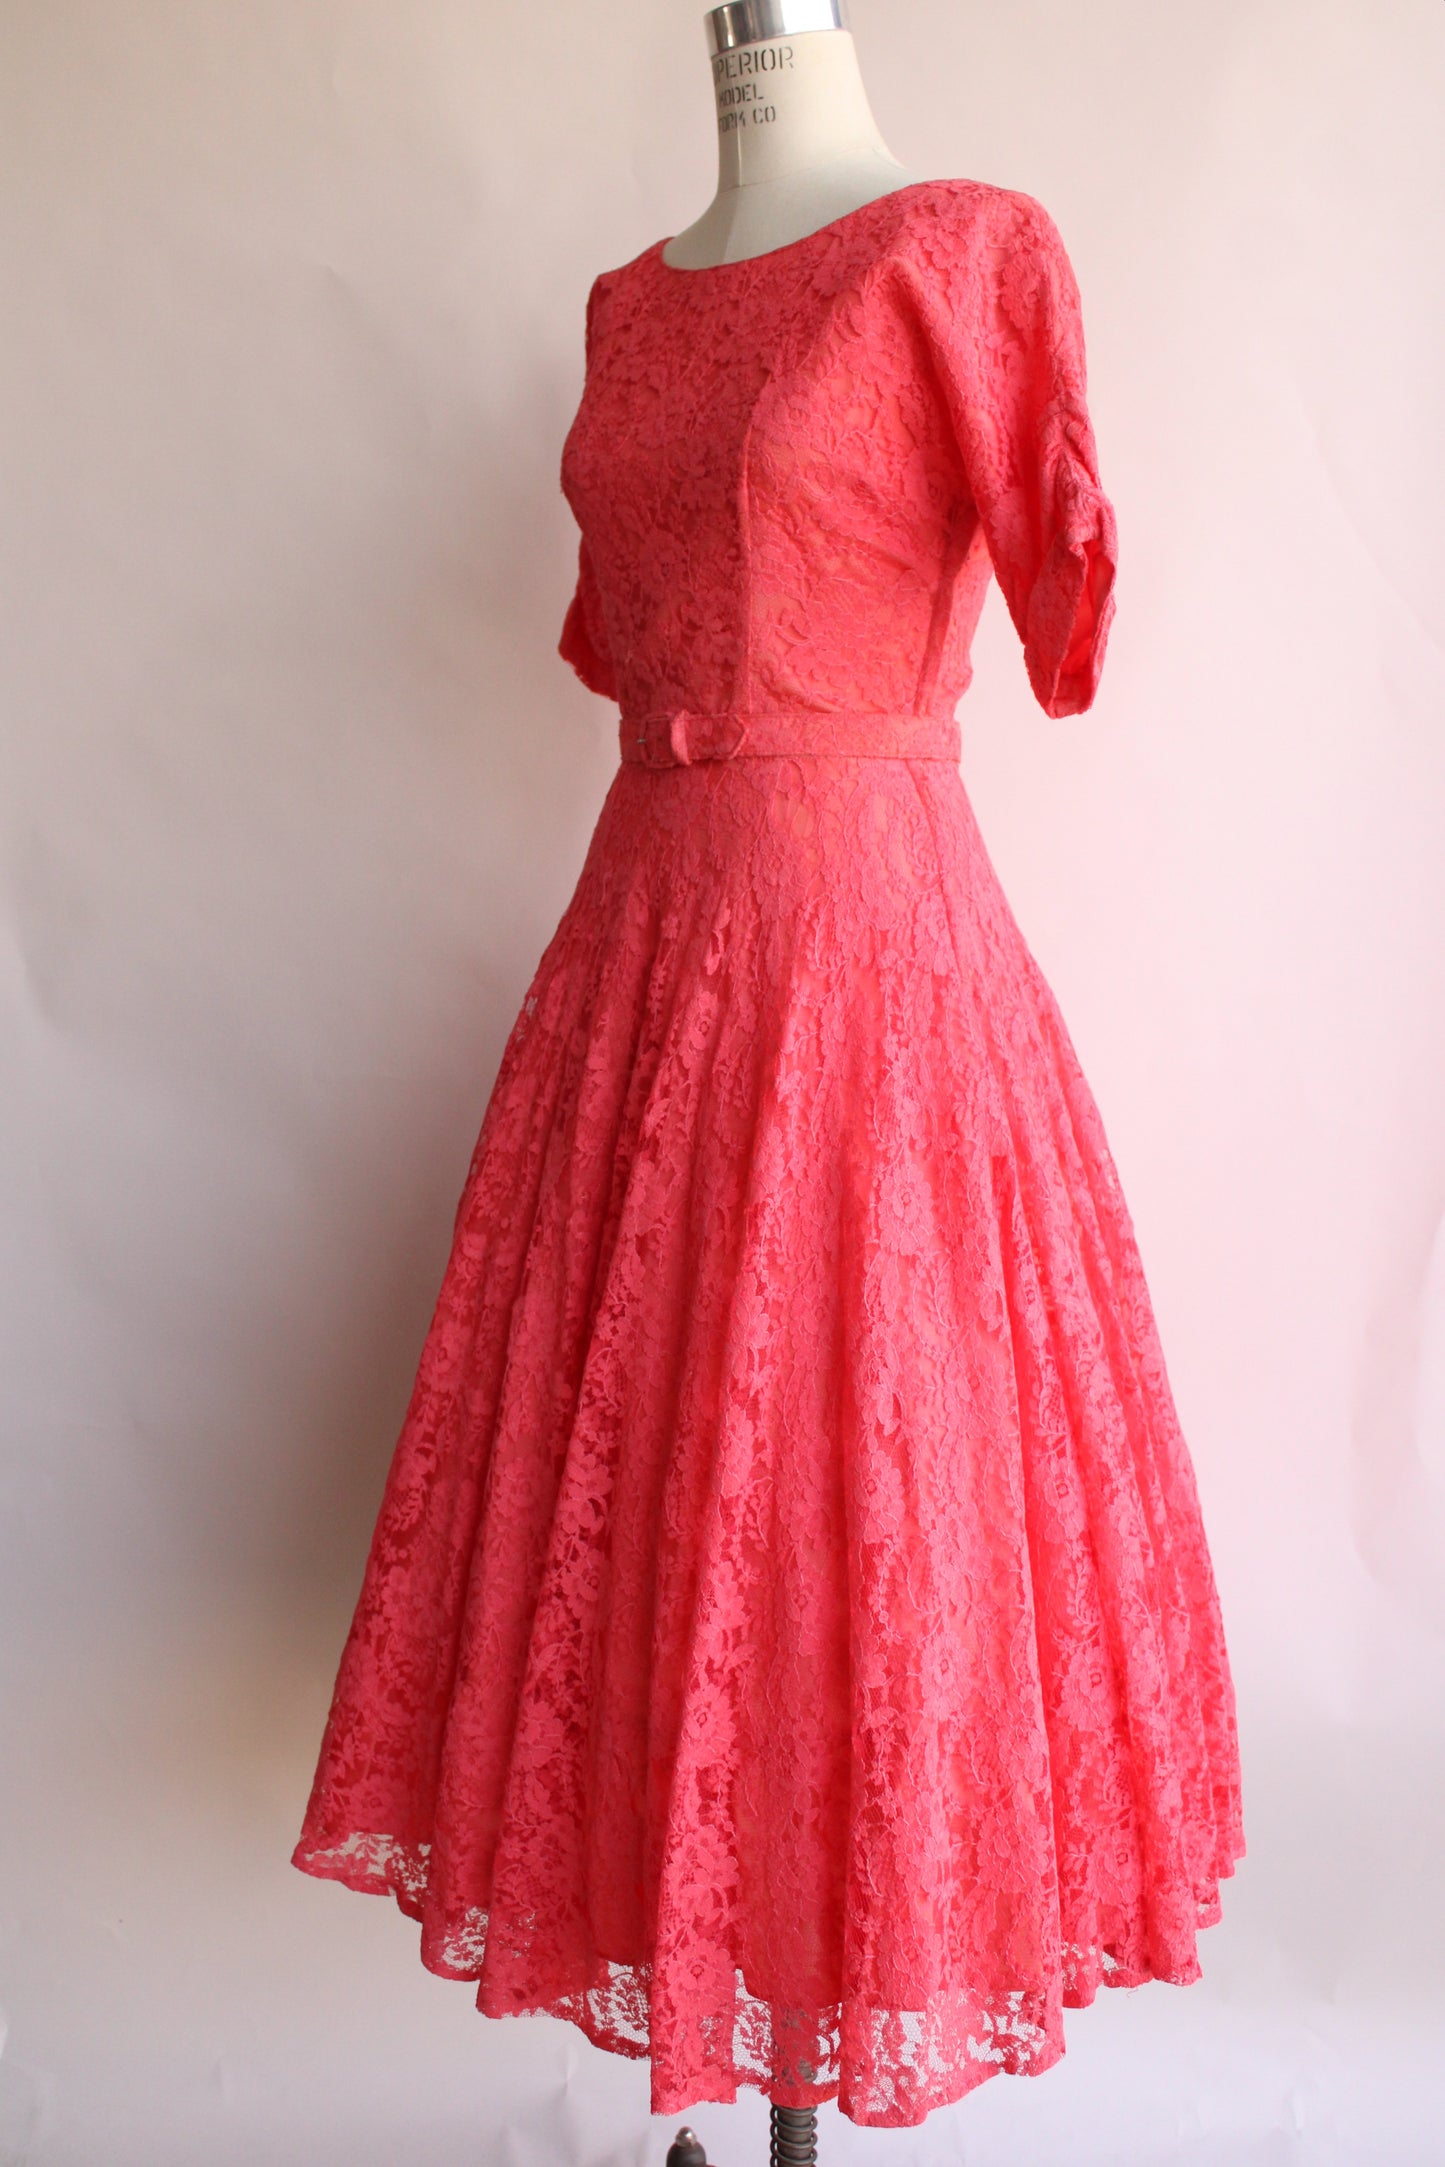 Vintage 1940s 1950s Pink Lace Dress With Belt by Jack Kopp